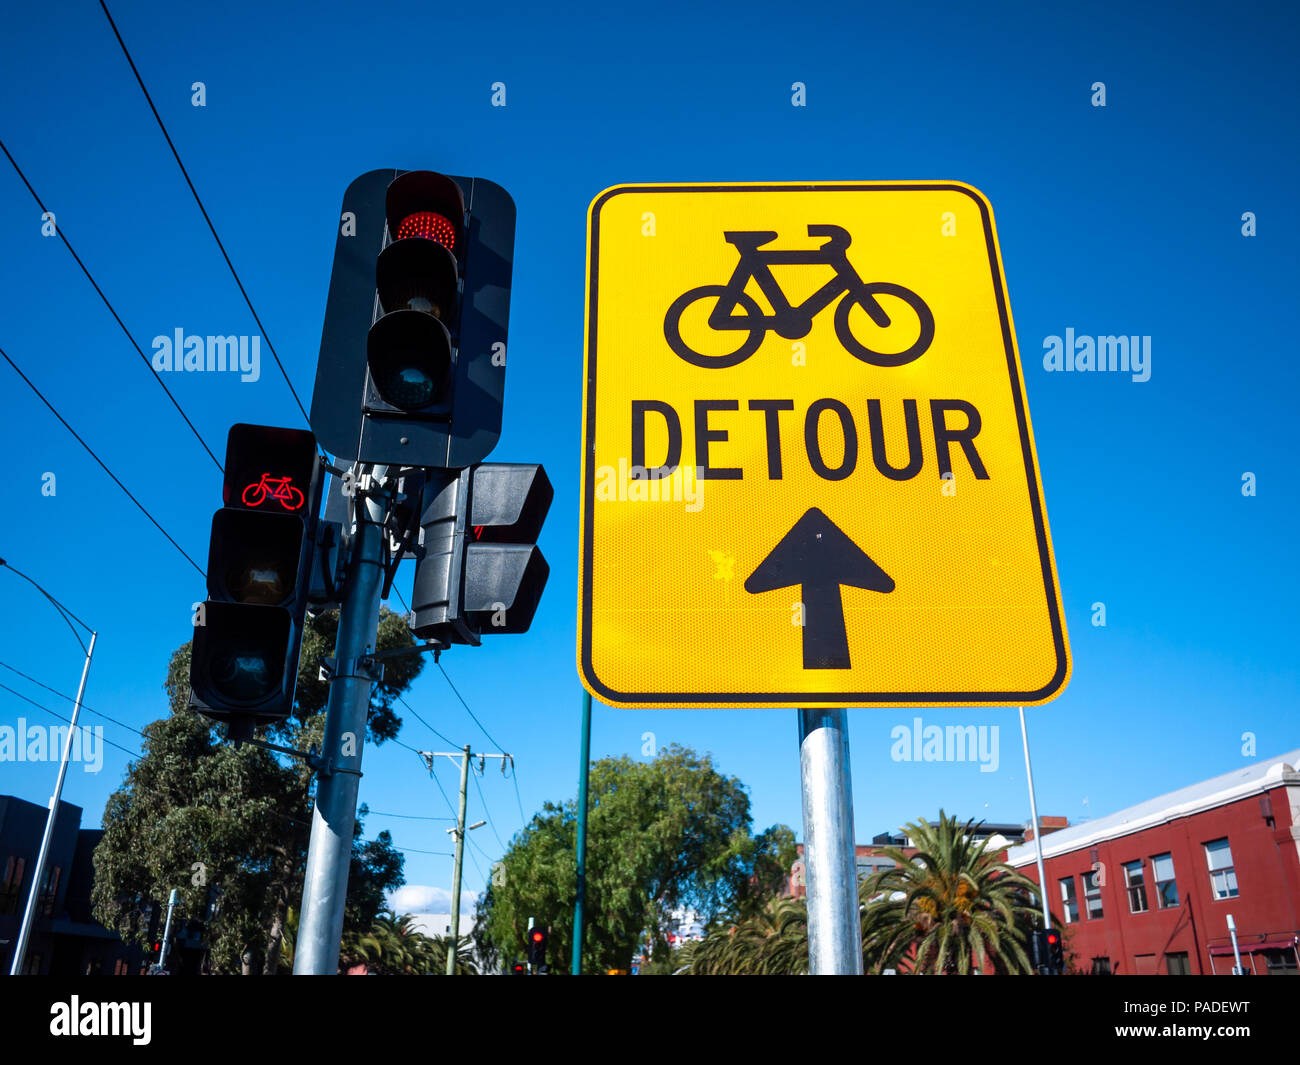 Sign of cycleway detour near traffic light on urban street. Melbourne, VIC Australia. Stock Photo